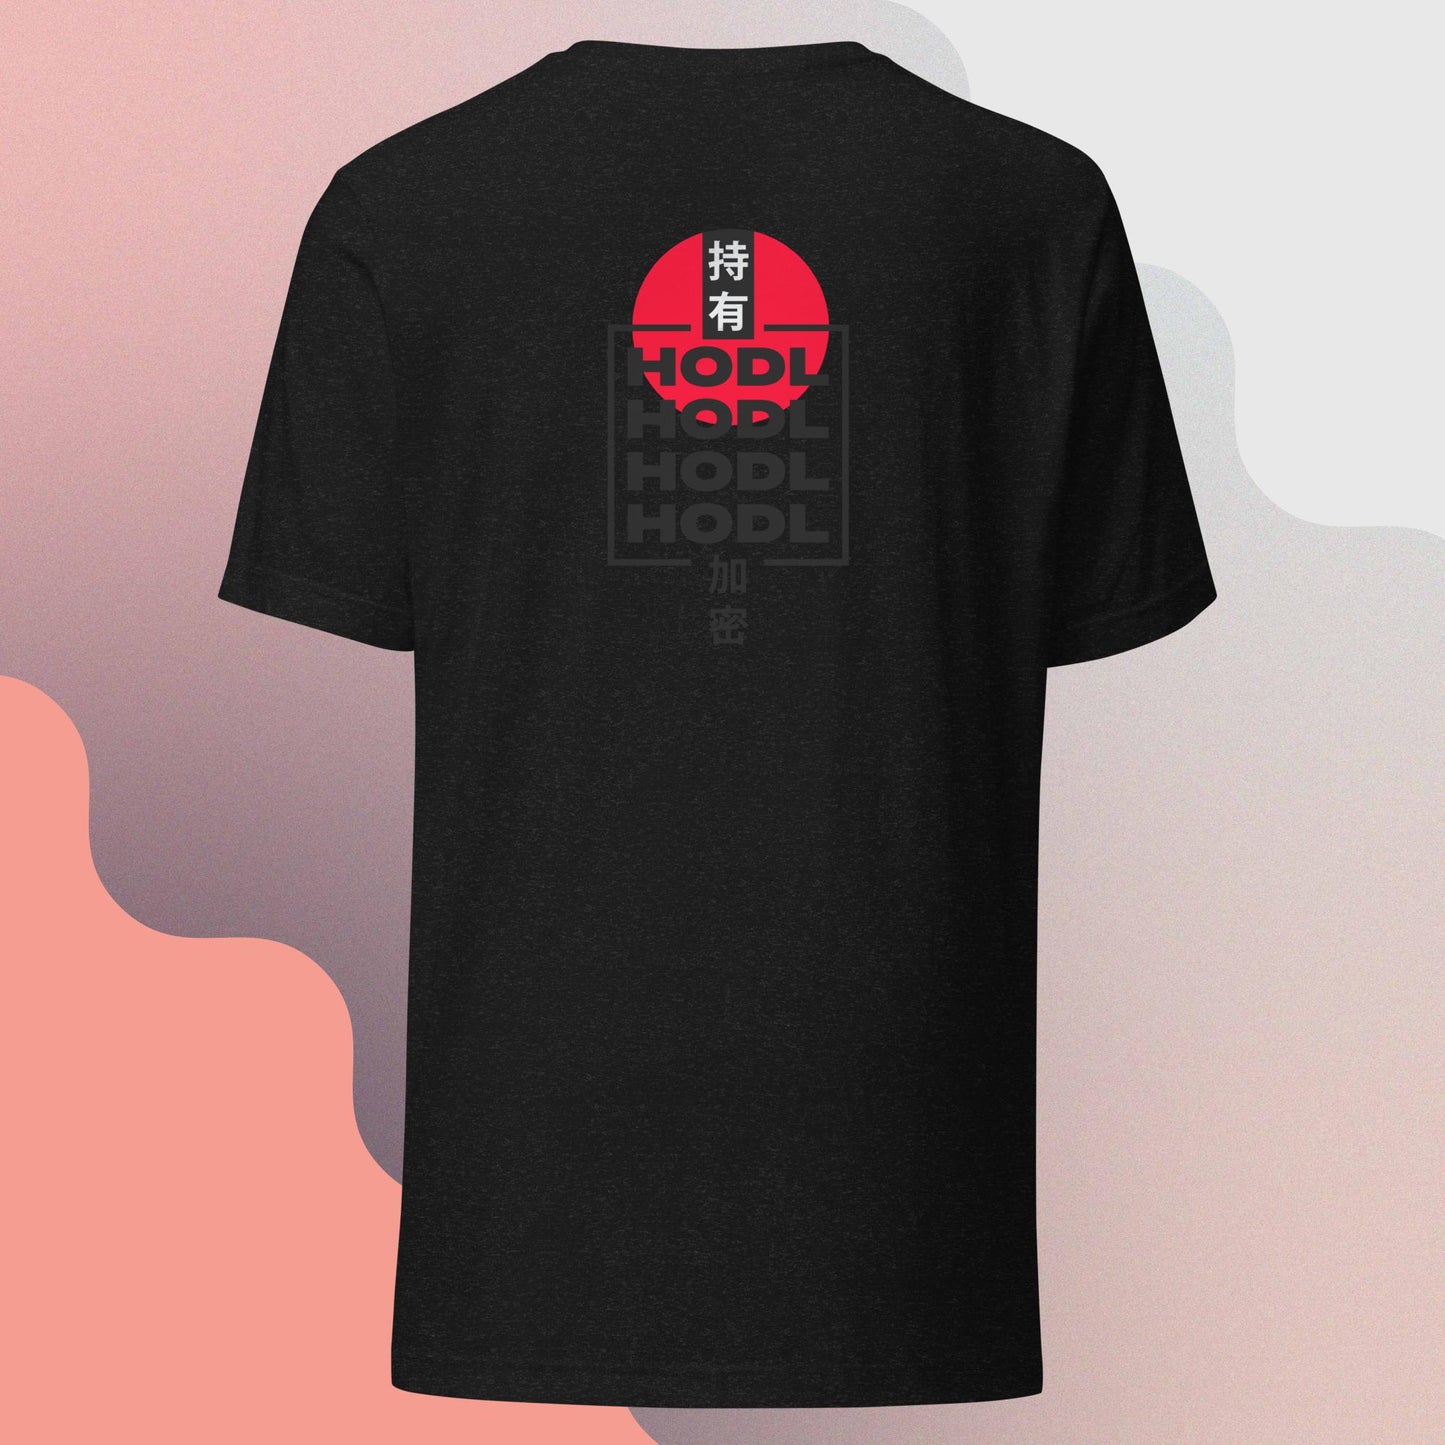 Shiba Inu Hodl T- Shirt v01 - Hodlers Crypto Merch Brand